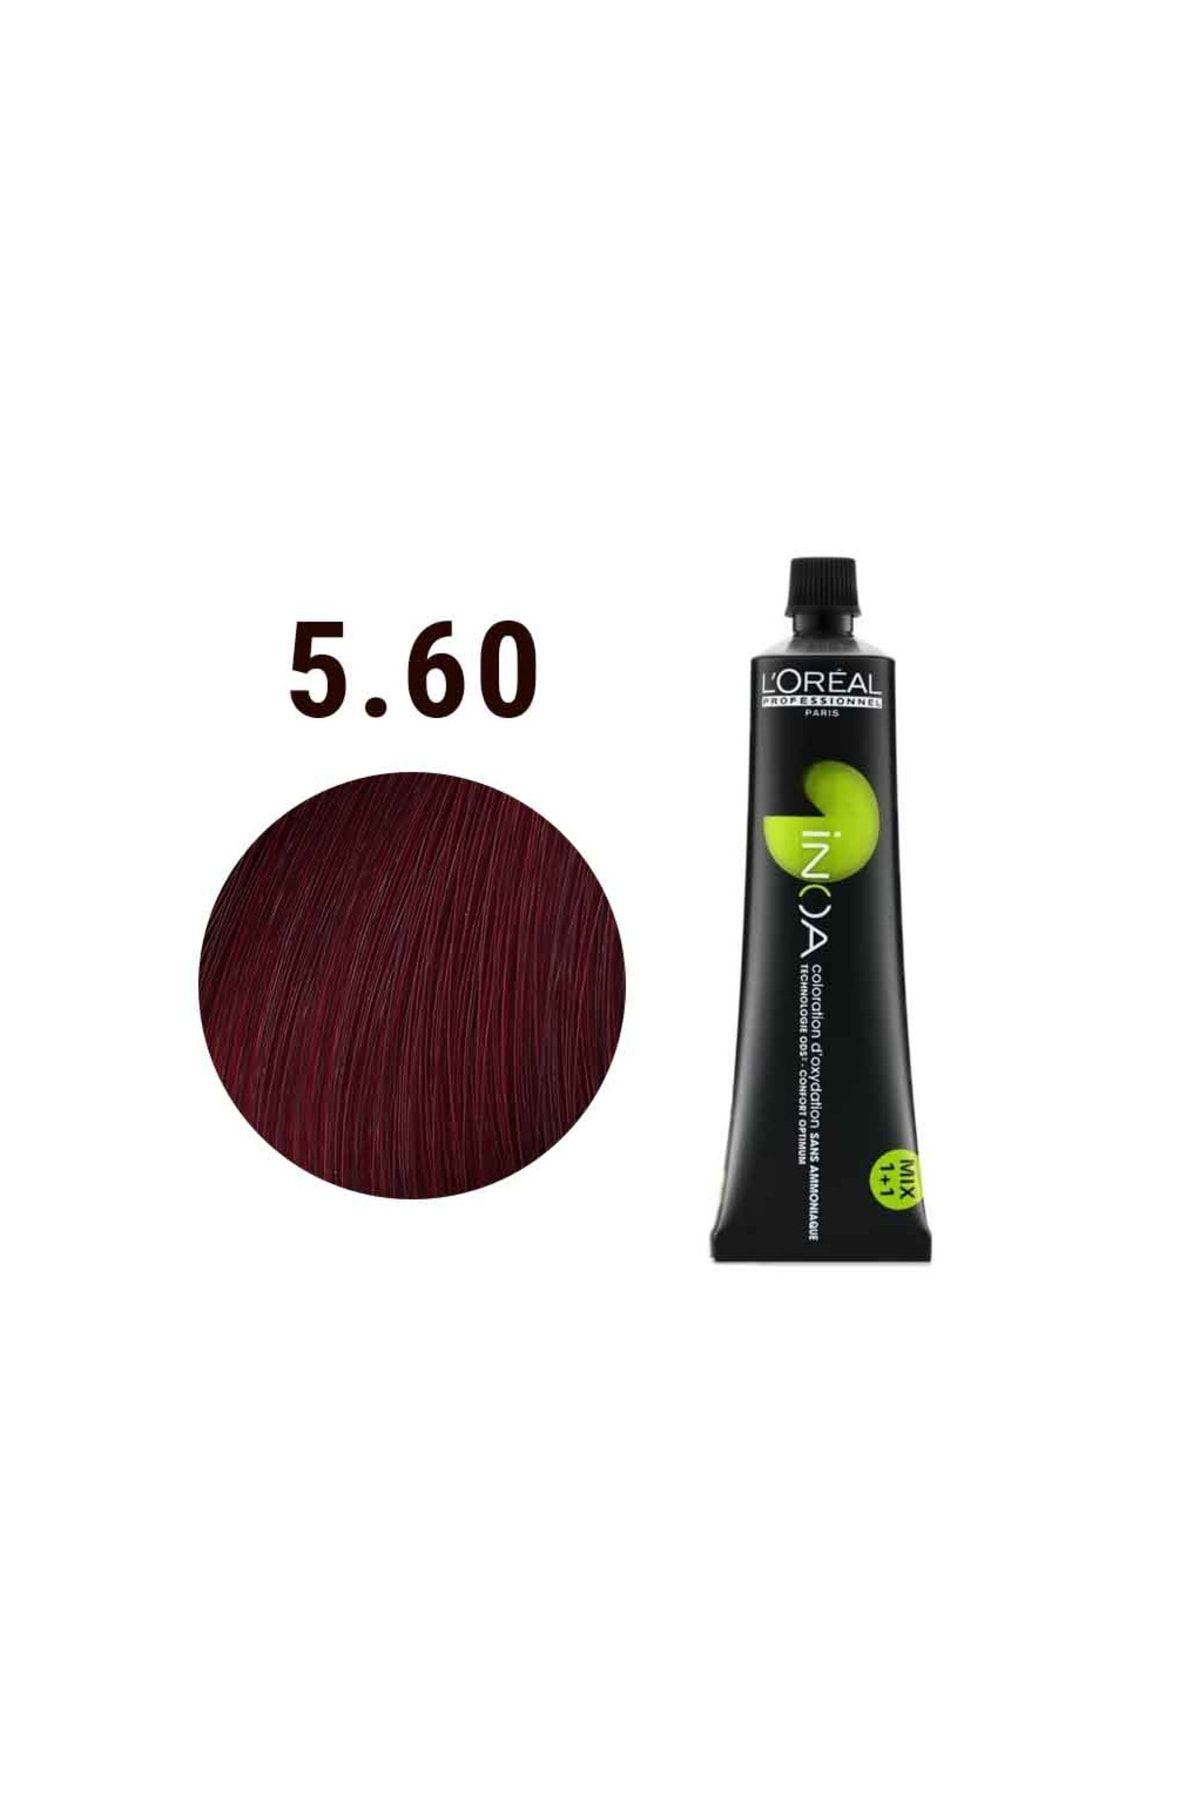 L'oreal Professionnel Inoa 5,60 Natural Light Brown Intense Red Defined Ammonia Free Permament Hair Color Cream 60ml